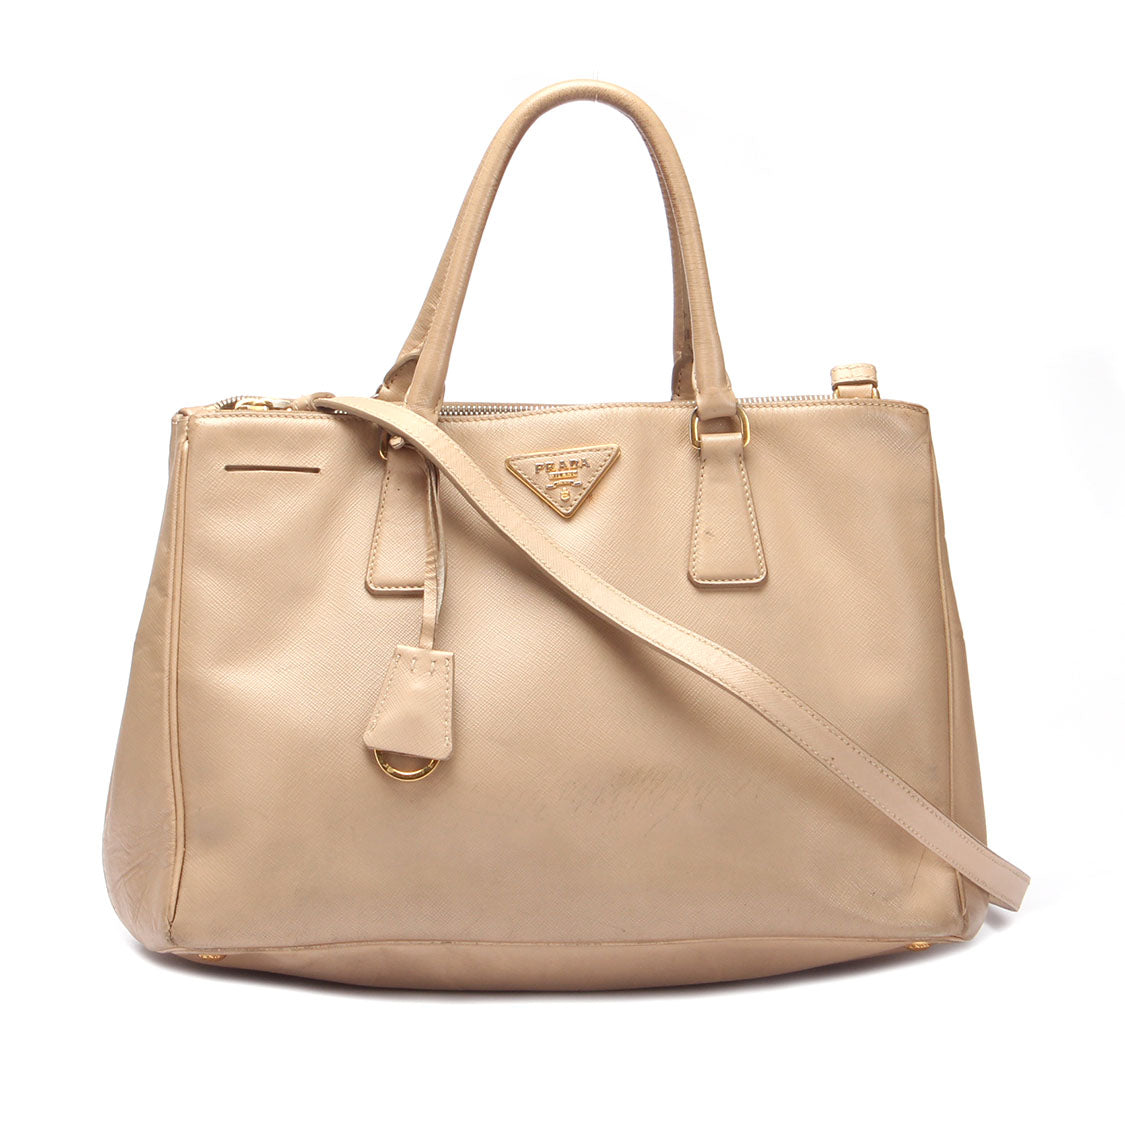 Prada - Sabbia Lux Saffiano Leather Shoulder Bag